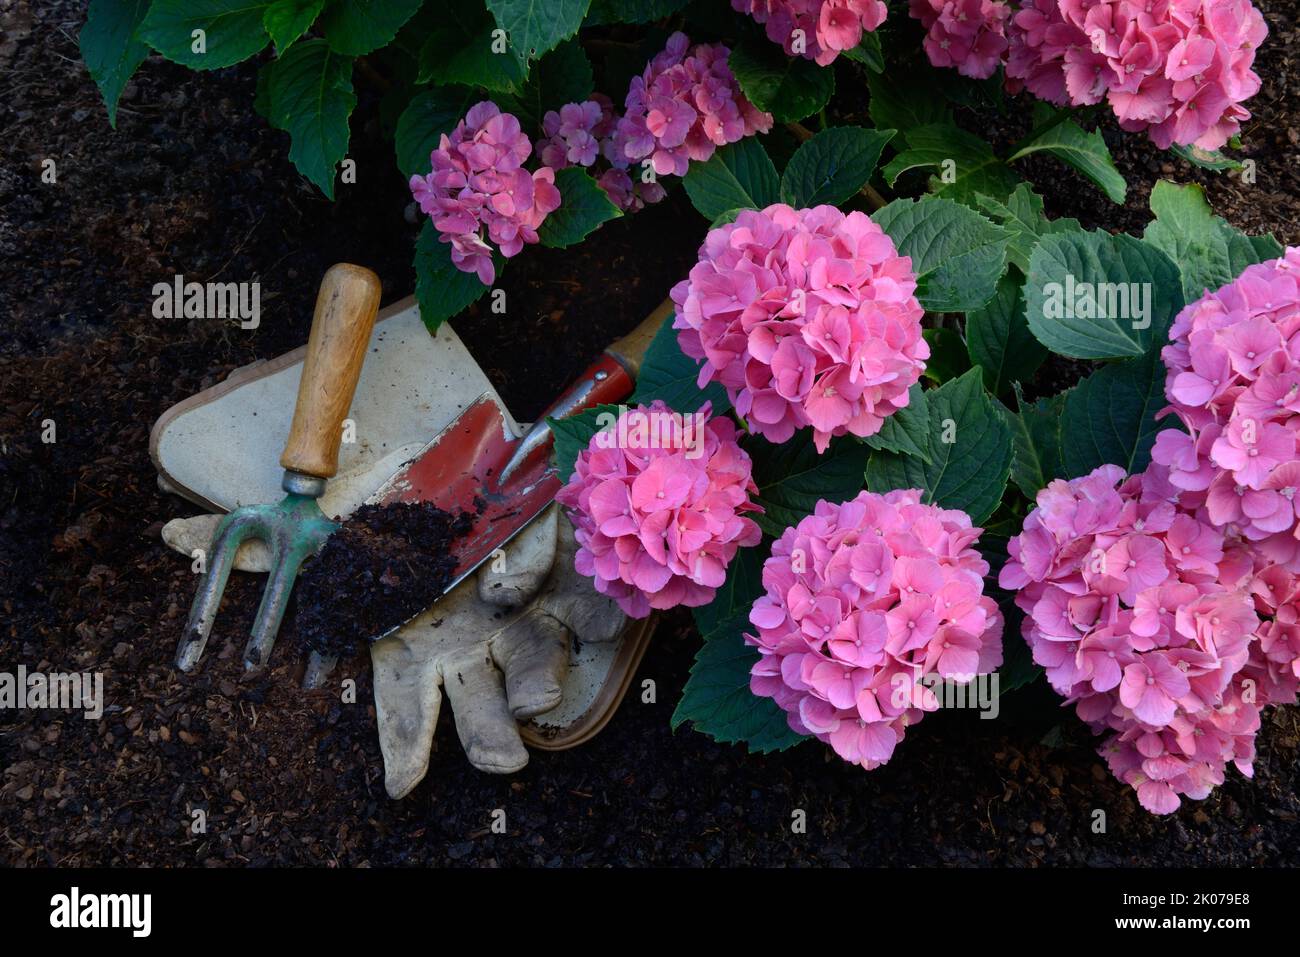 Flowering bigleaf hydrangea (Hydrangea macrophylla) and garden tools Stock Photo